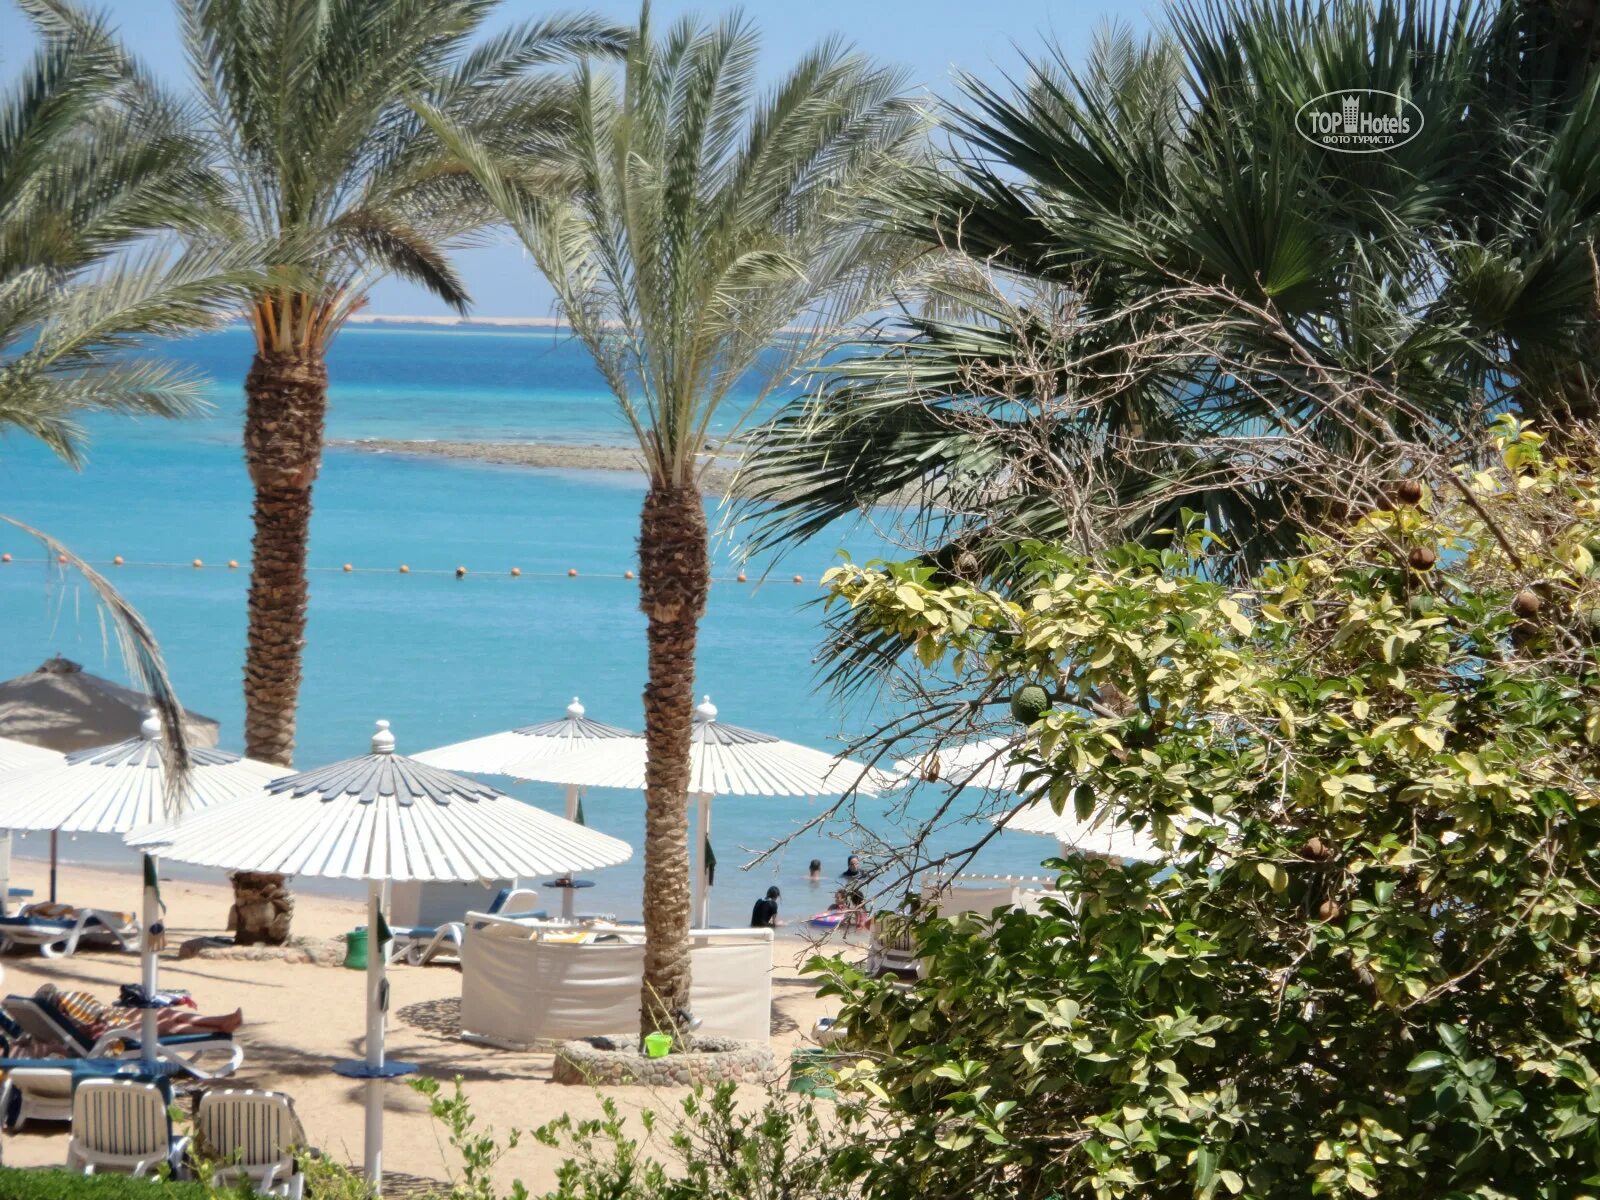 Хургада hurghada swiss inn hurghada. Swiss Inn Resort Hurghada 5. Свисс ИНН Хургада. Свисс ИНН Резорт Хургада.